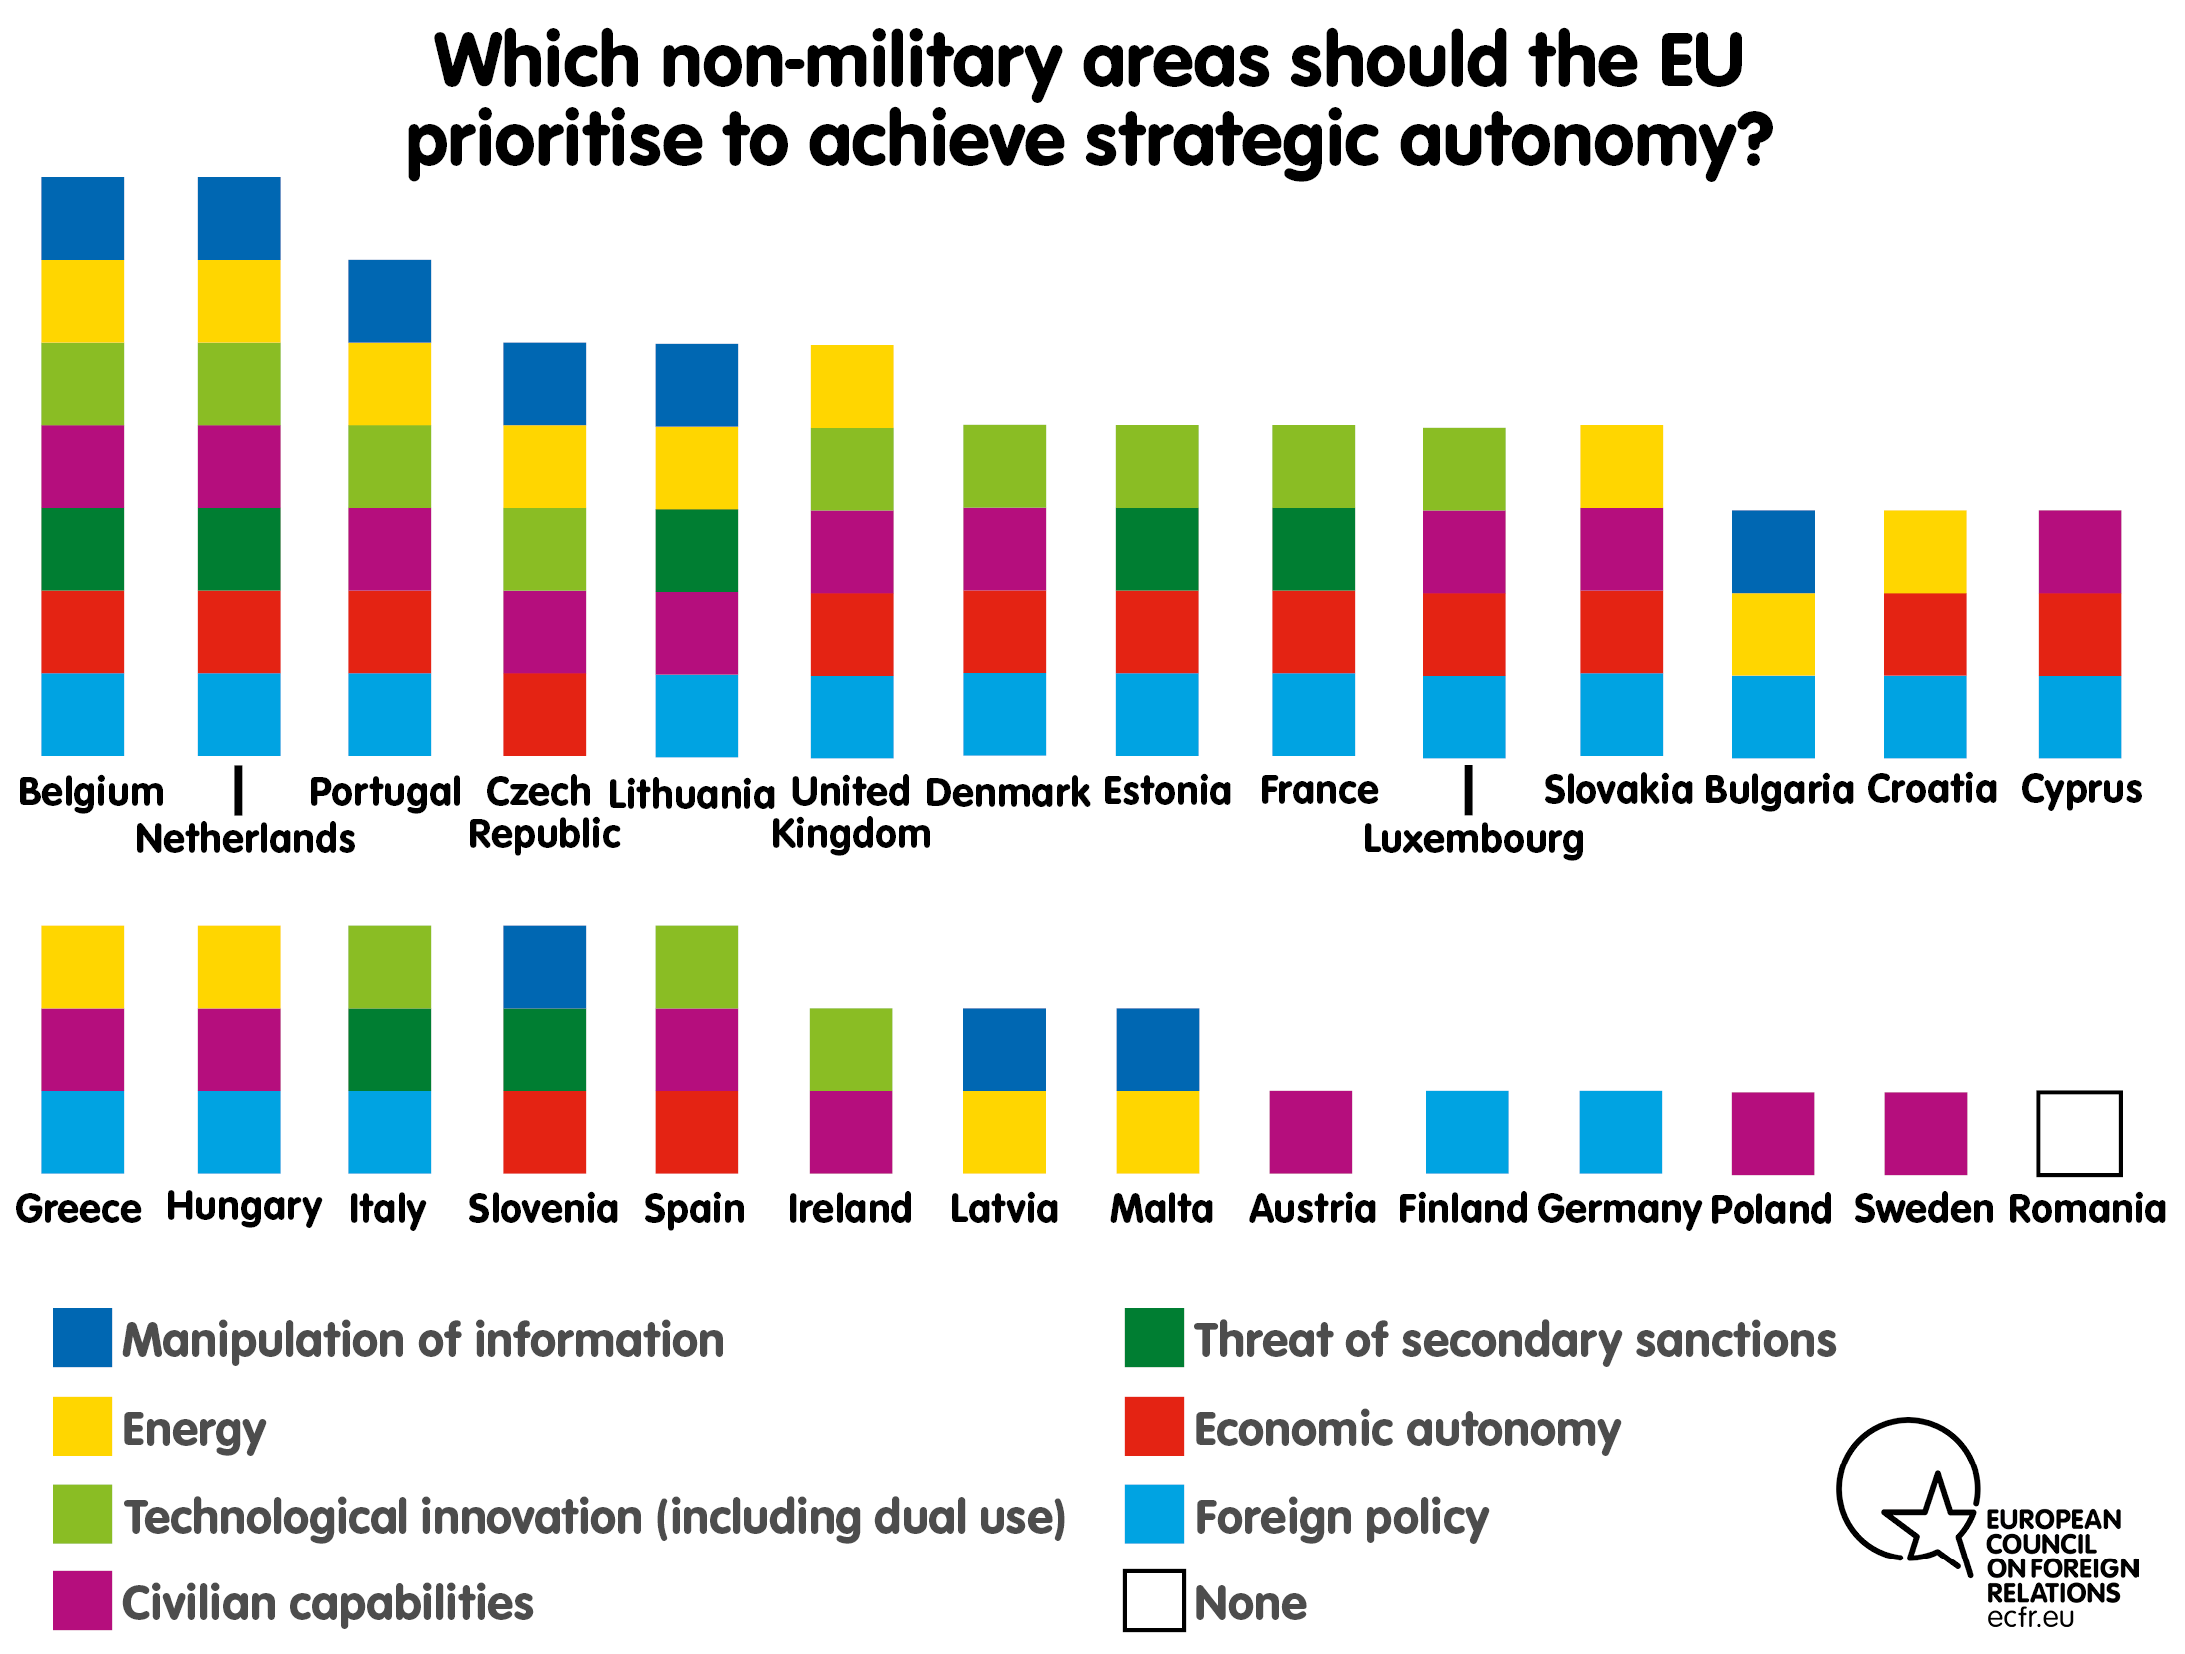 Which non-military areas should the EU prioritise to achieve strategic autonomy